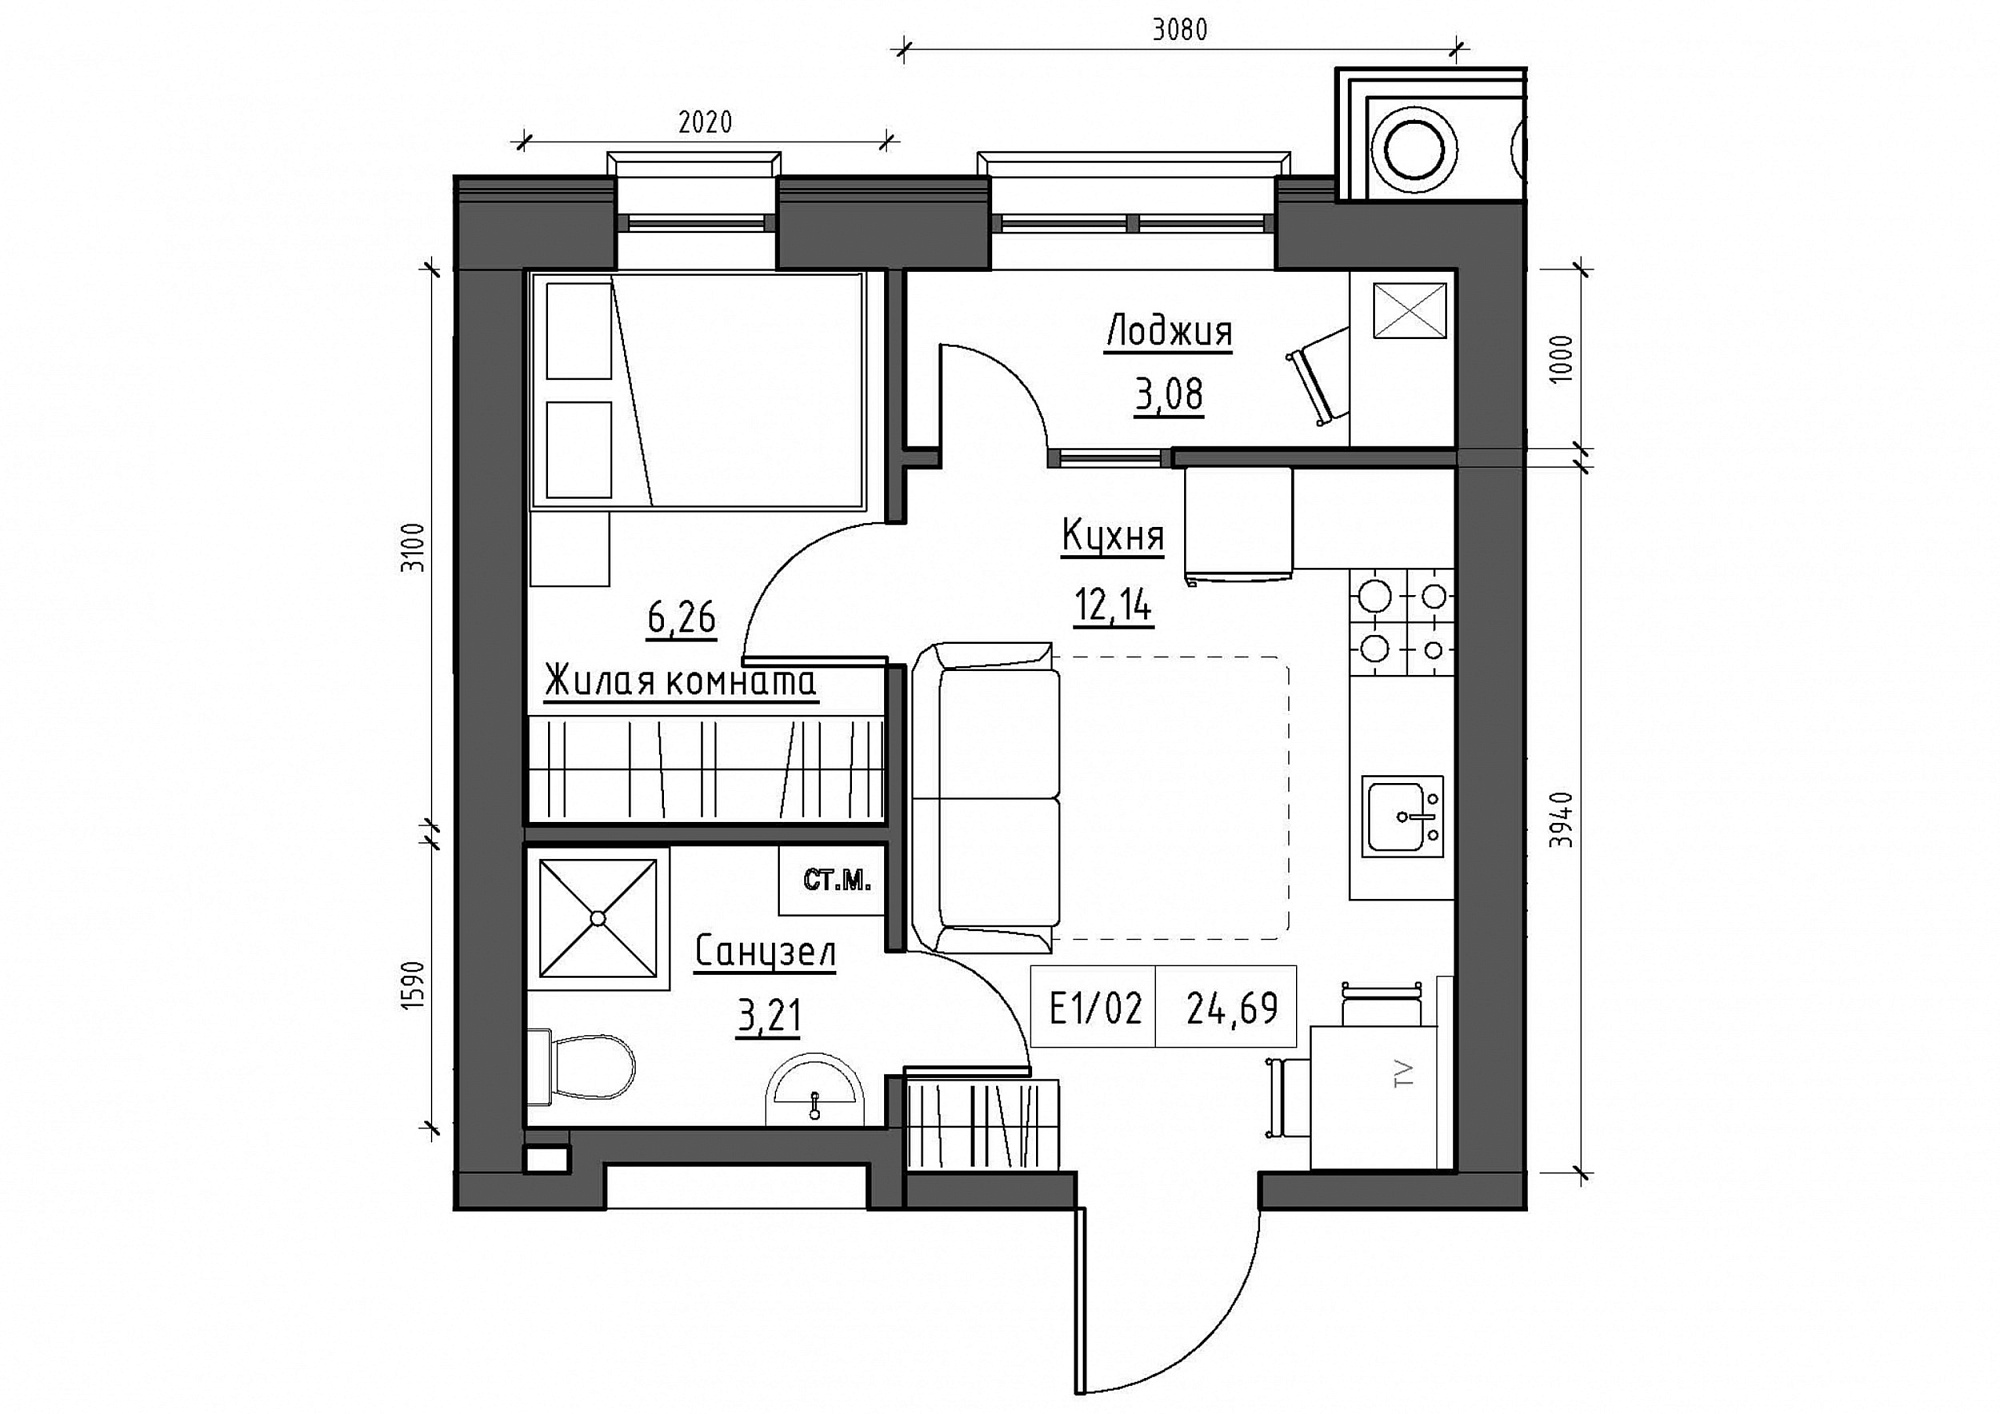 Planning 1-rm flats area 24.69m2, KS-011-03/0014.